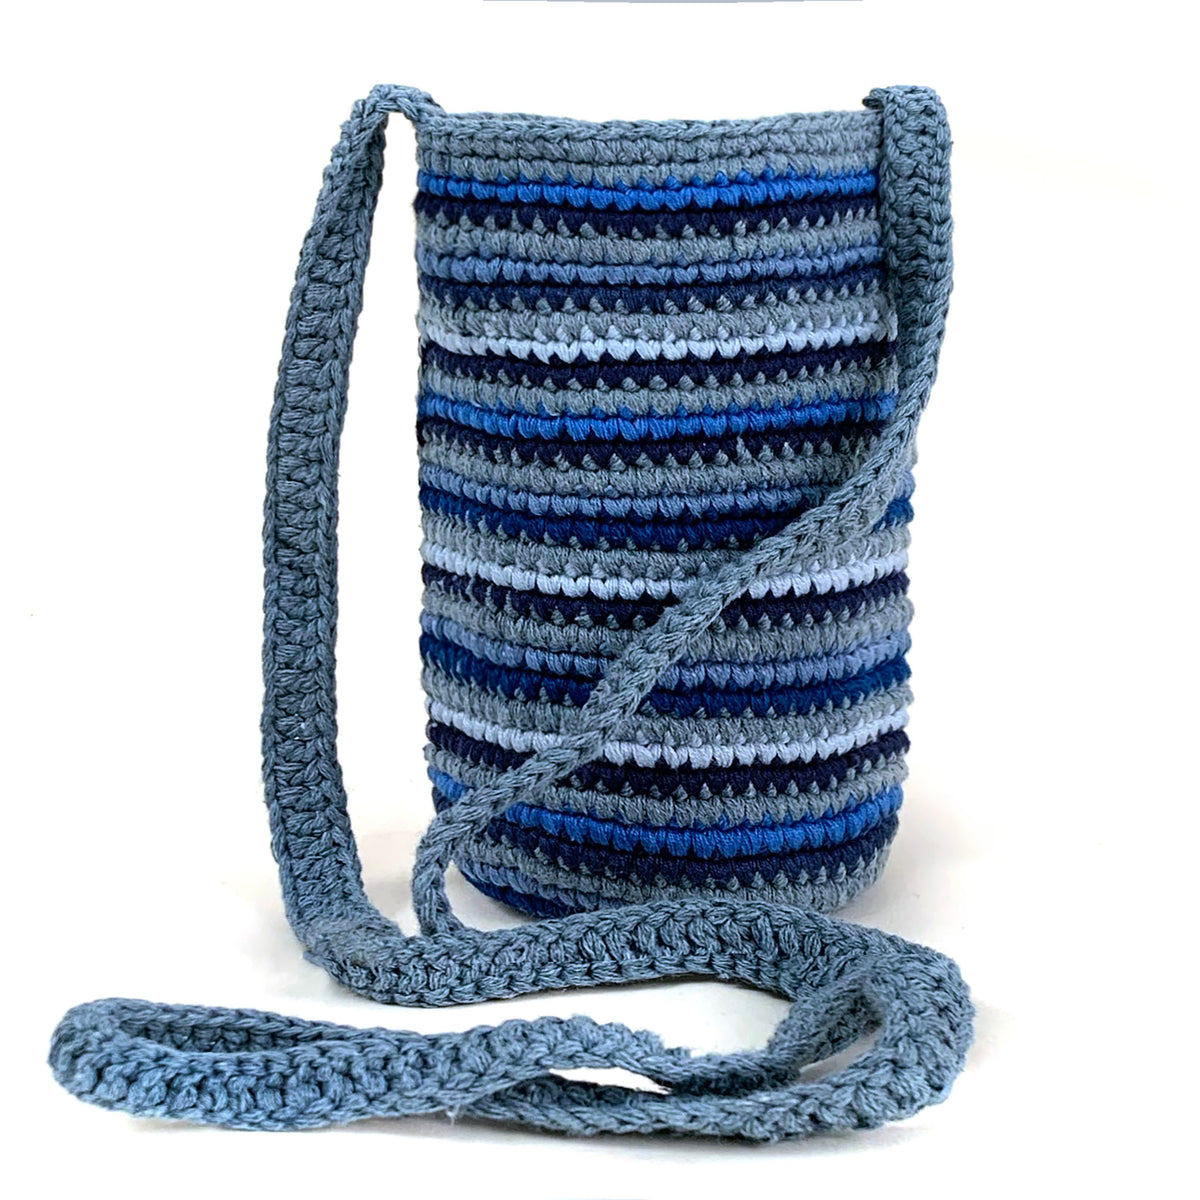 crochet bottle bag with narrow stripes of blue